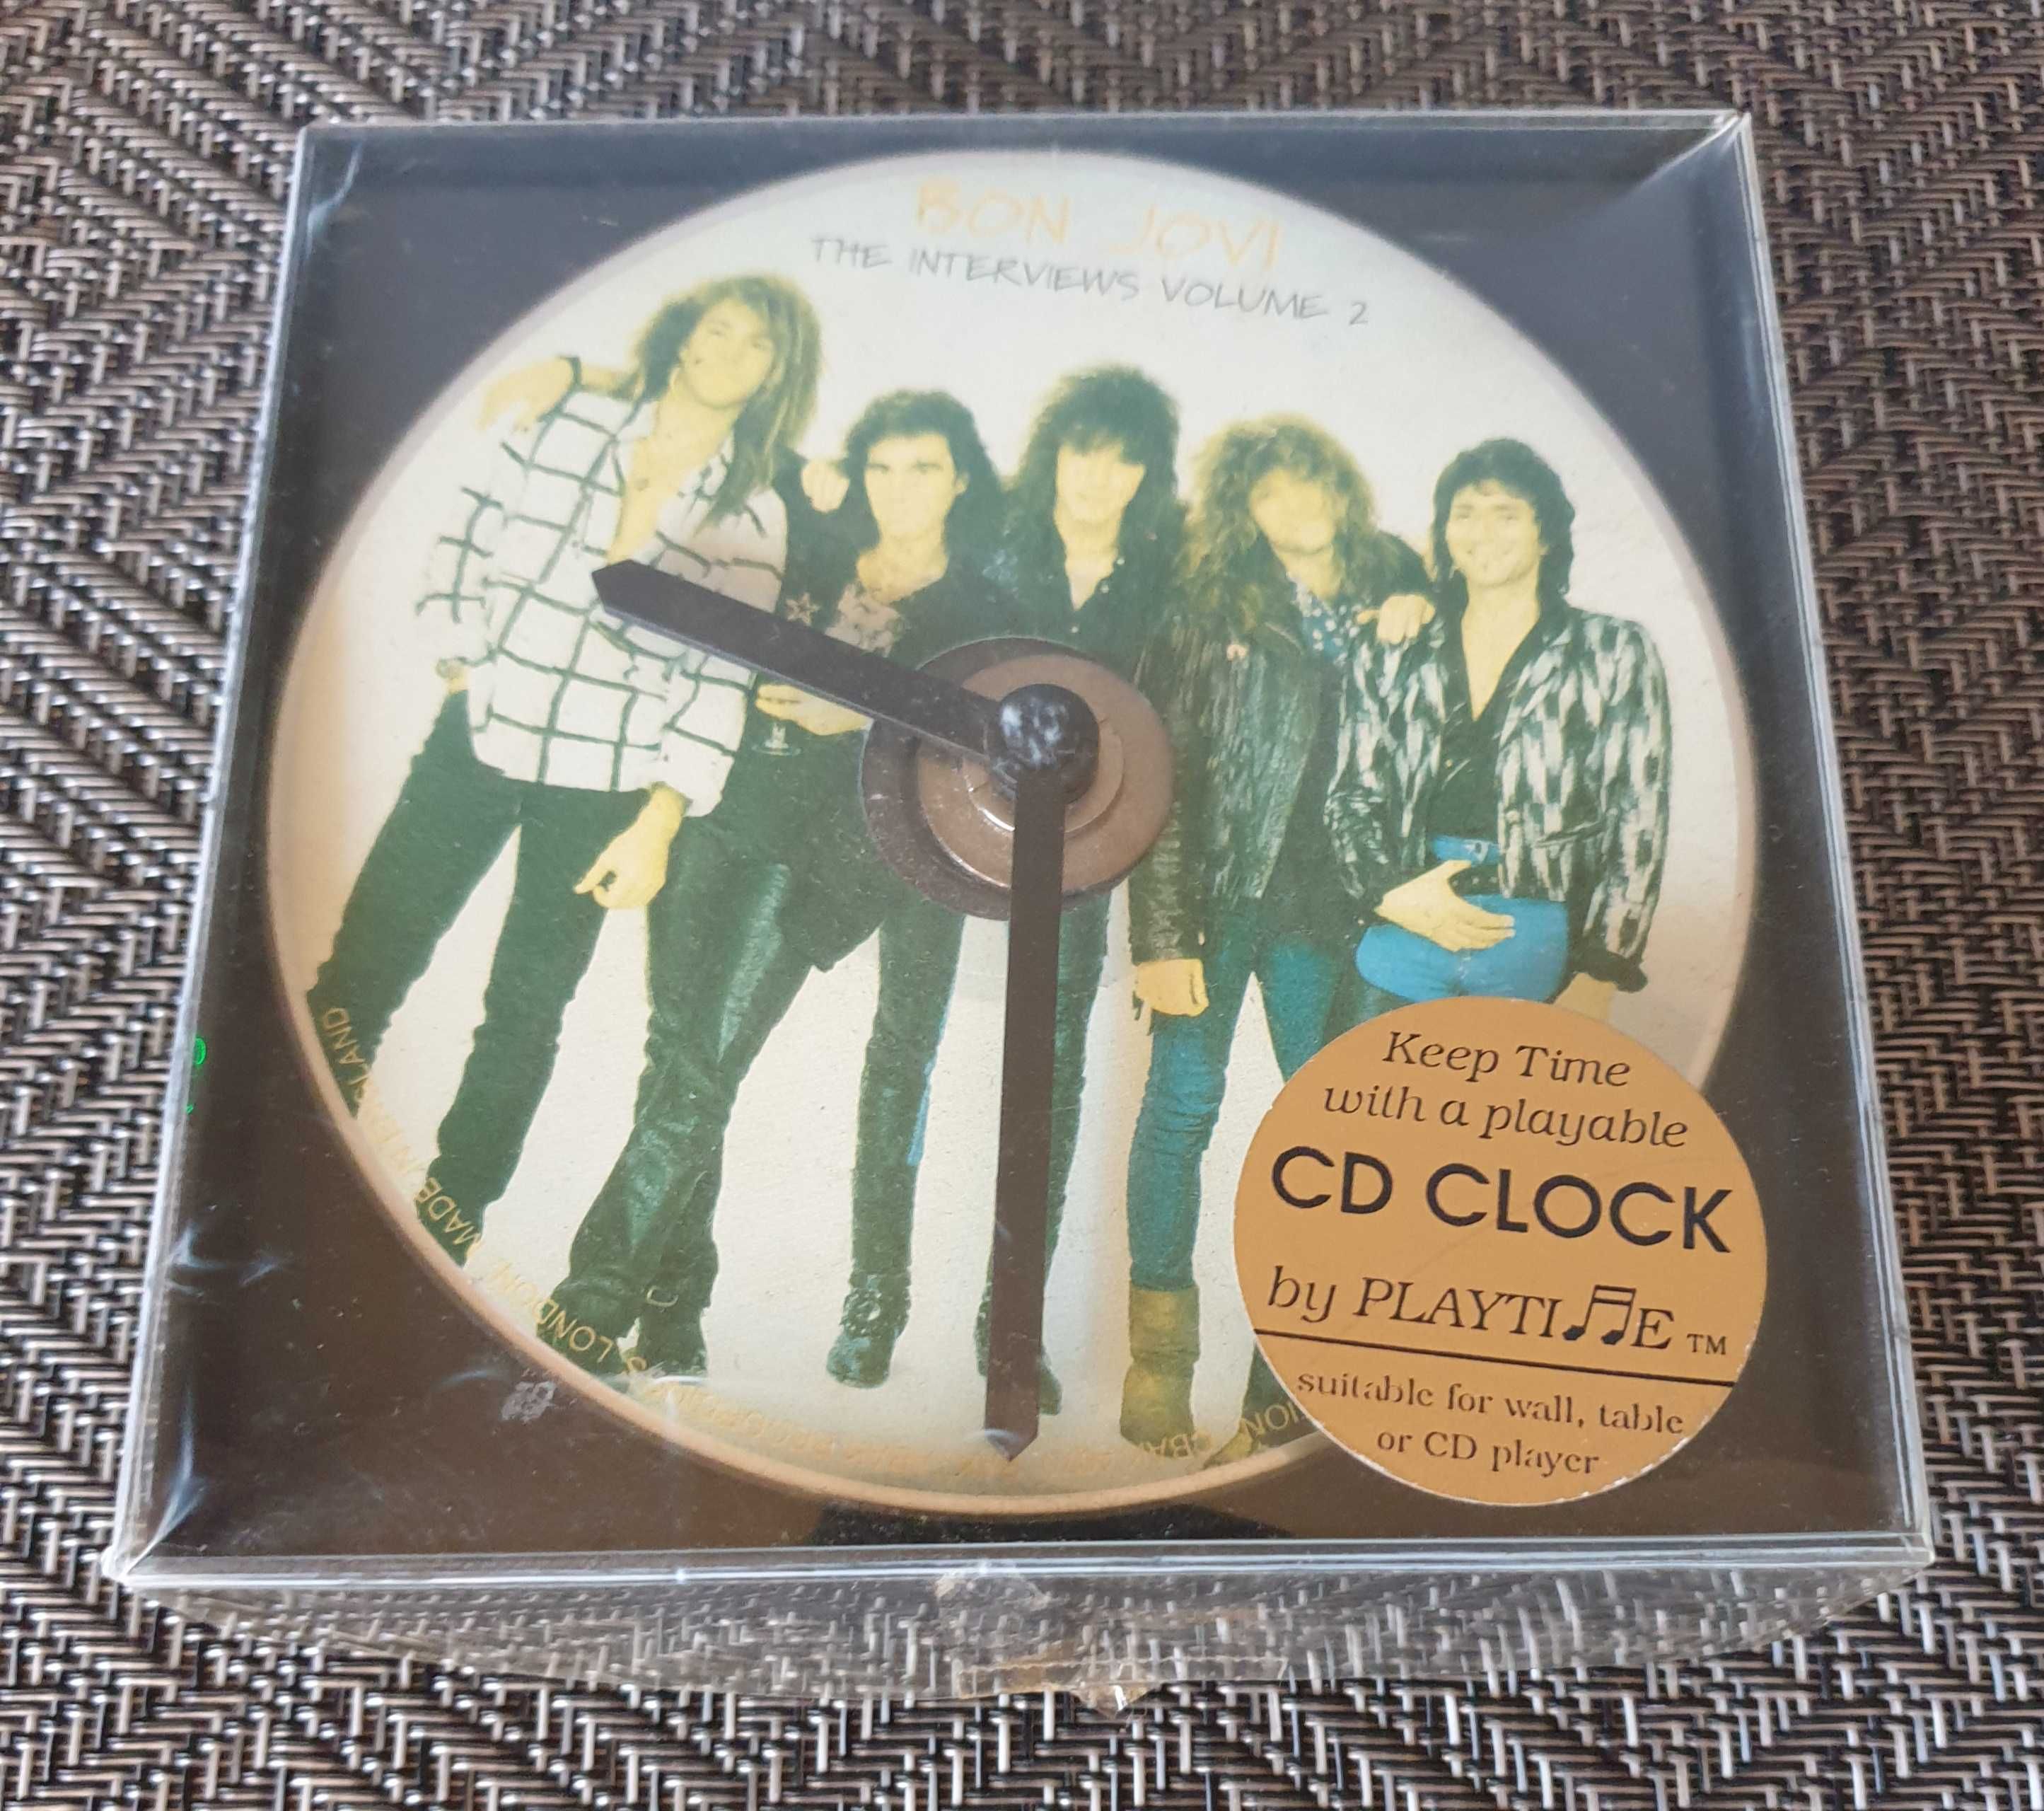 Bon Jovi The Interviews Volume 2
Zegar płyta CD zegarek